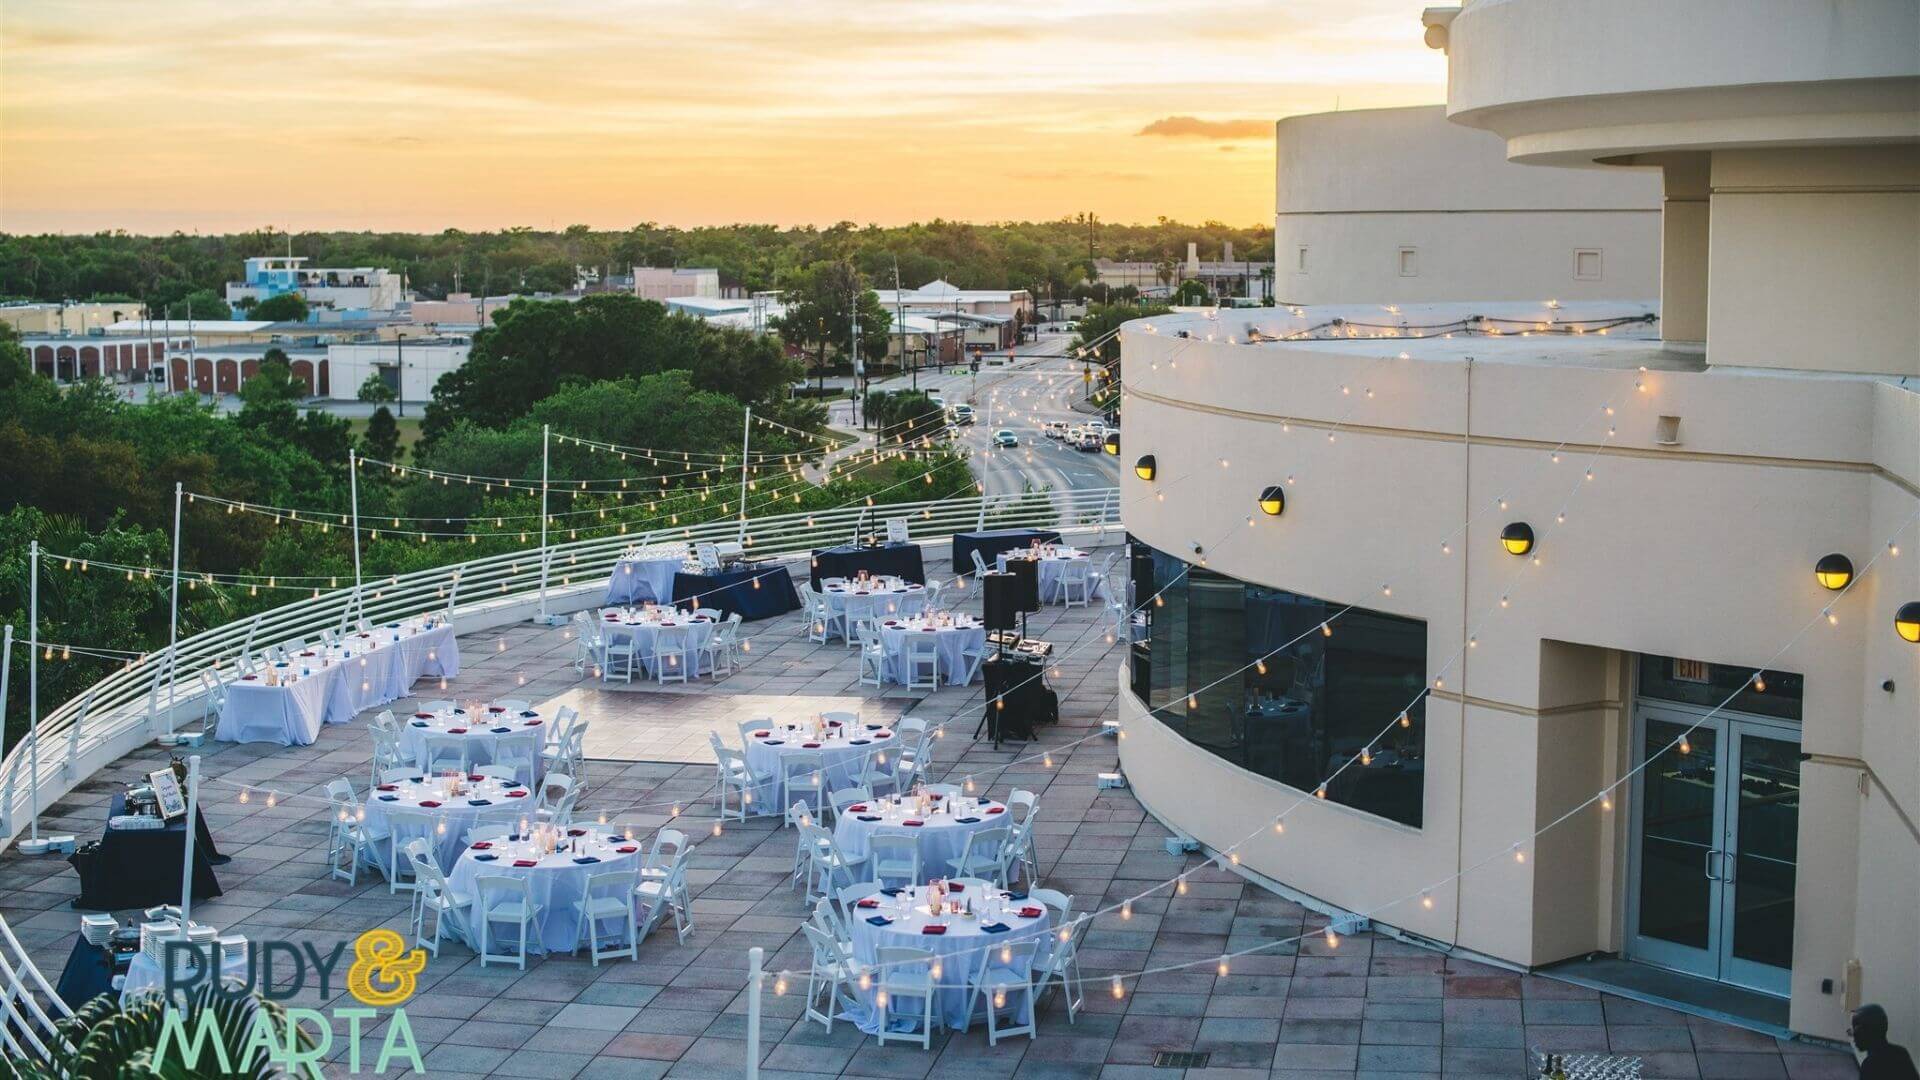 Orlando Science Center Wedding at sunset